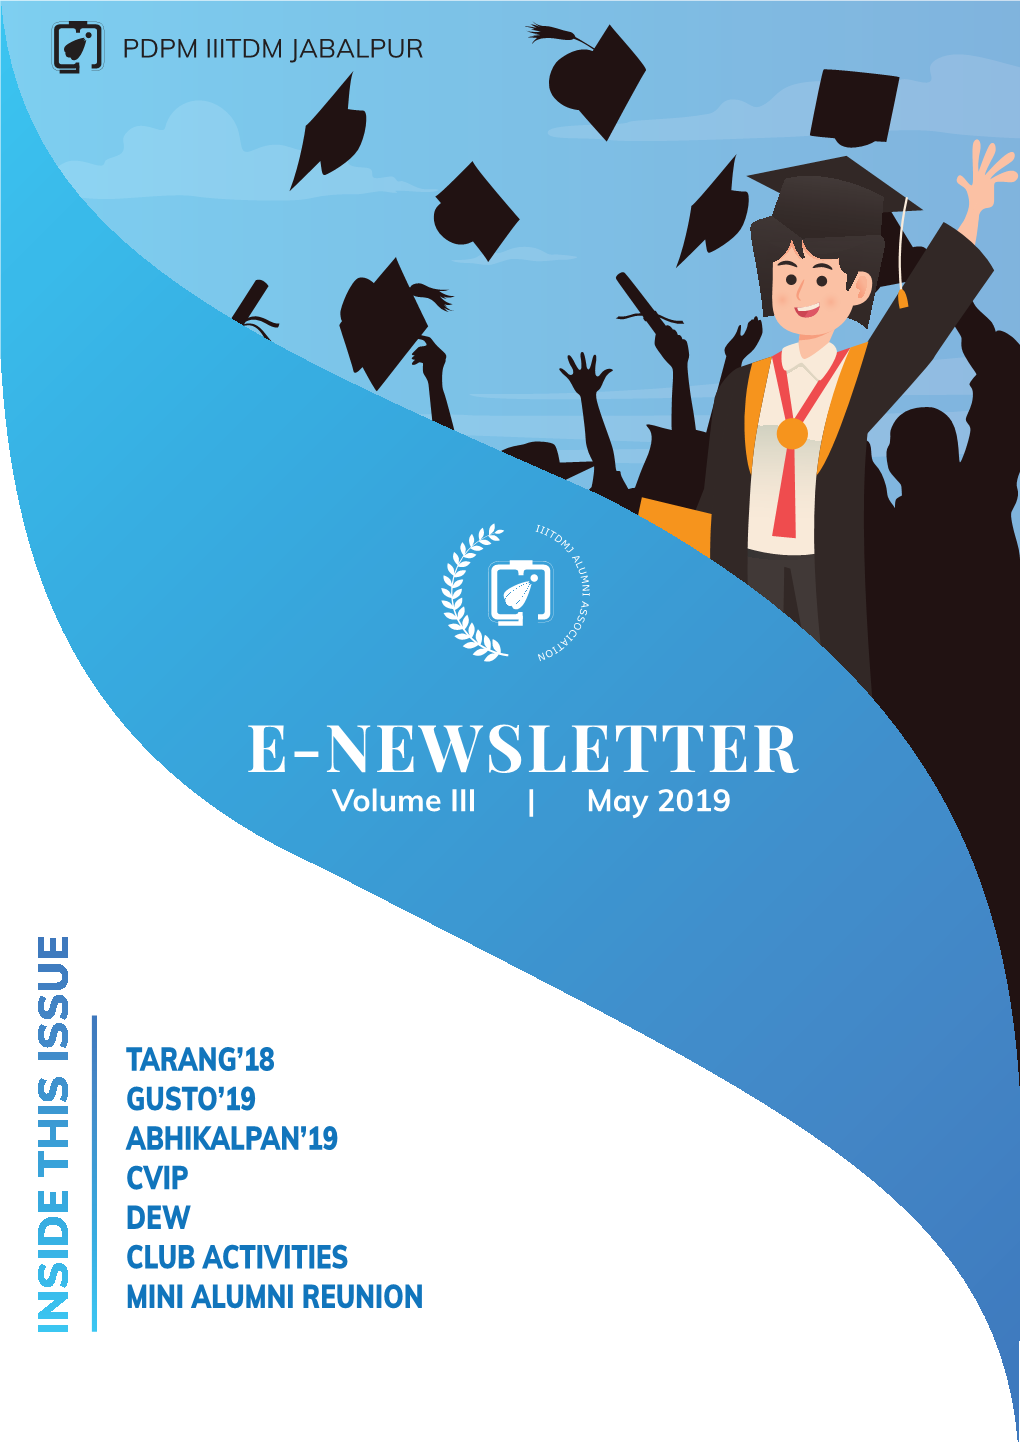 E-NEWSLETTER Volume III | May 2019